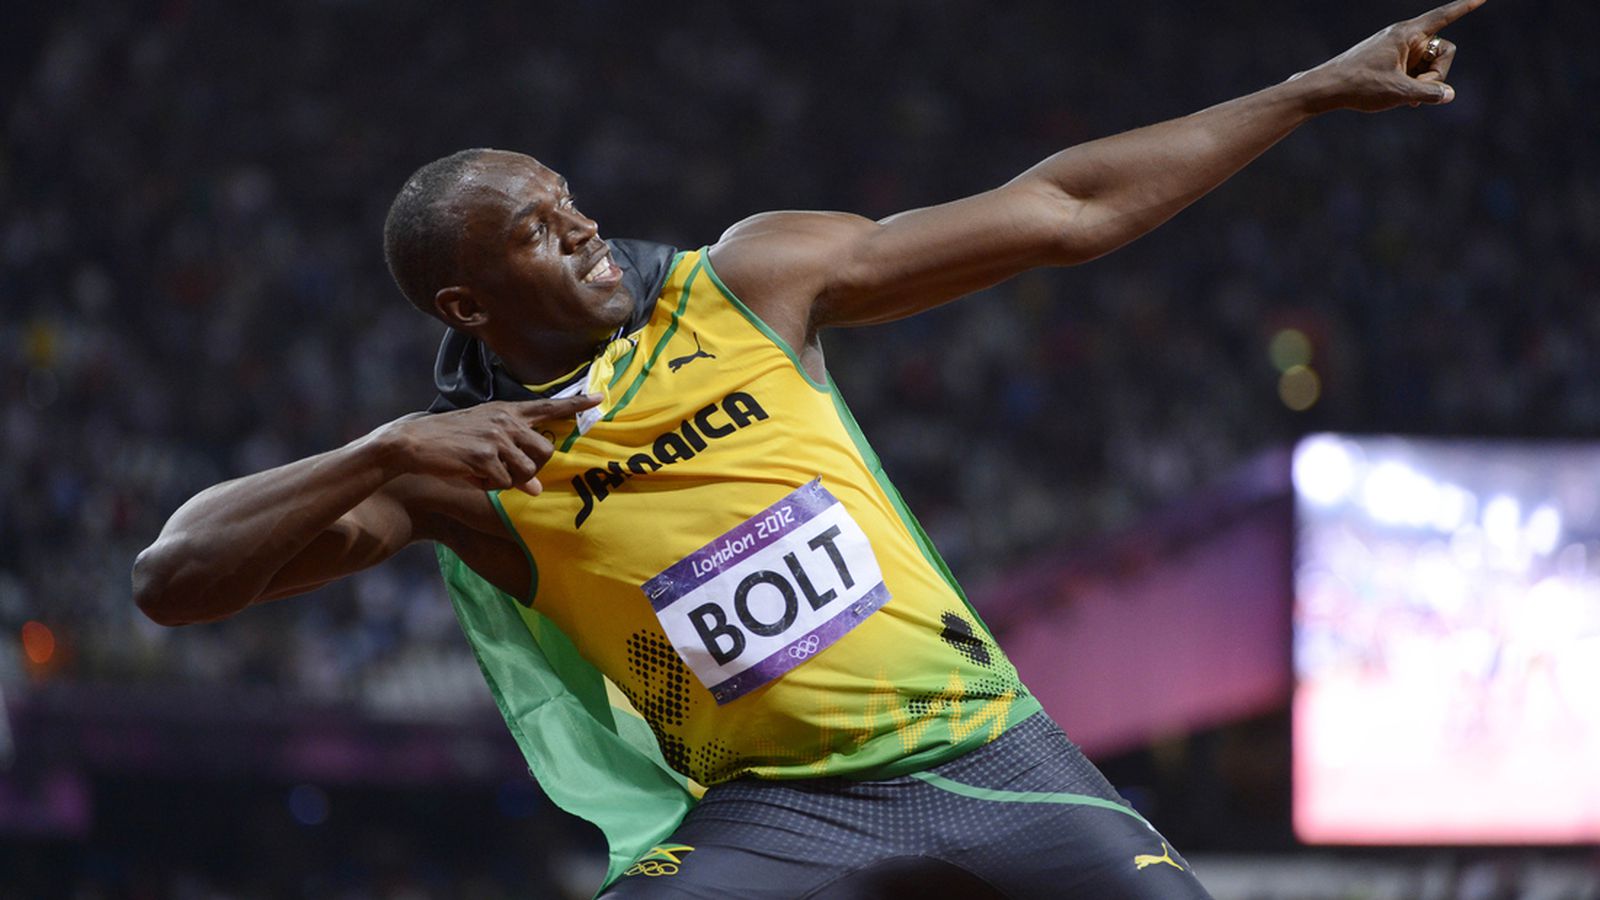 Lightning Strikes Twice Bolt Repeats As 100m Champion